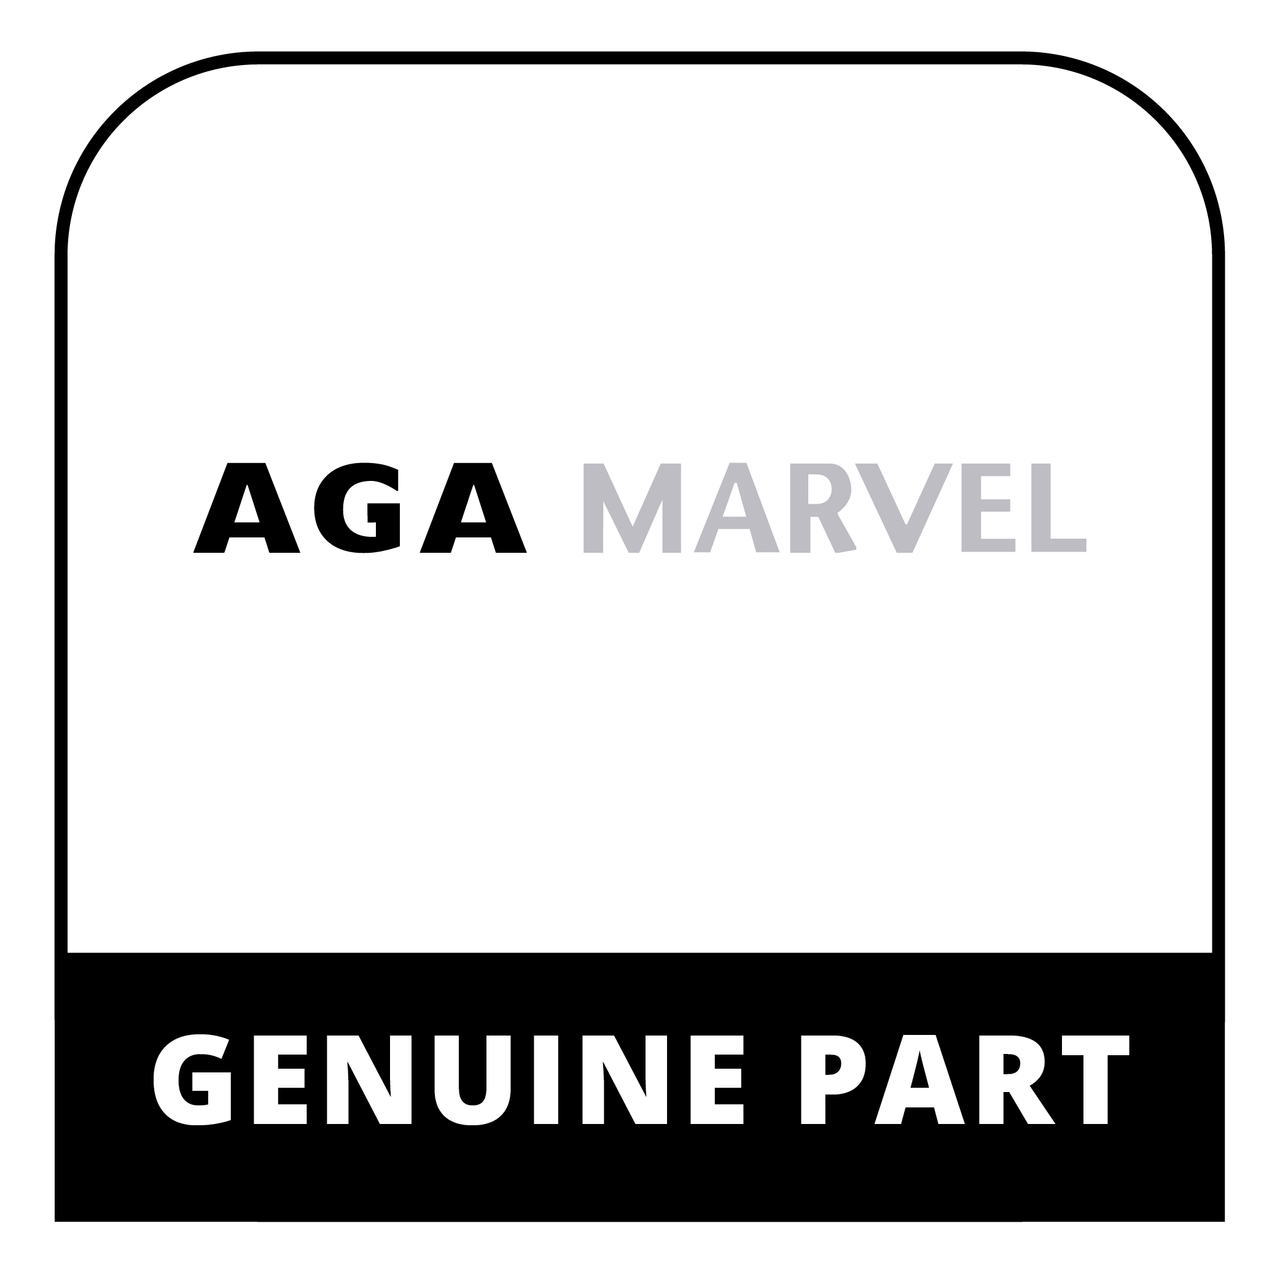 AGA Marvel P057413 - Left-Hand Door Glass Screened - Genuine AGA Marvel Part